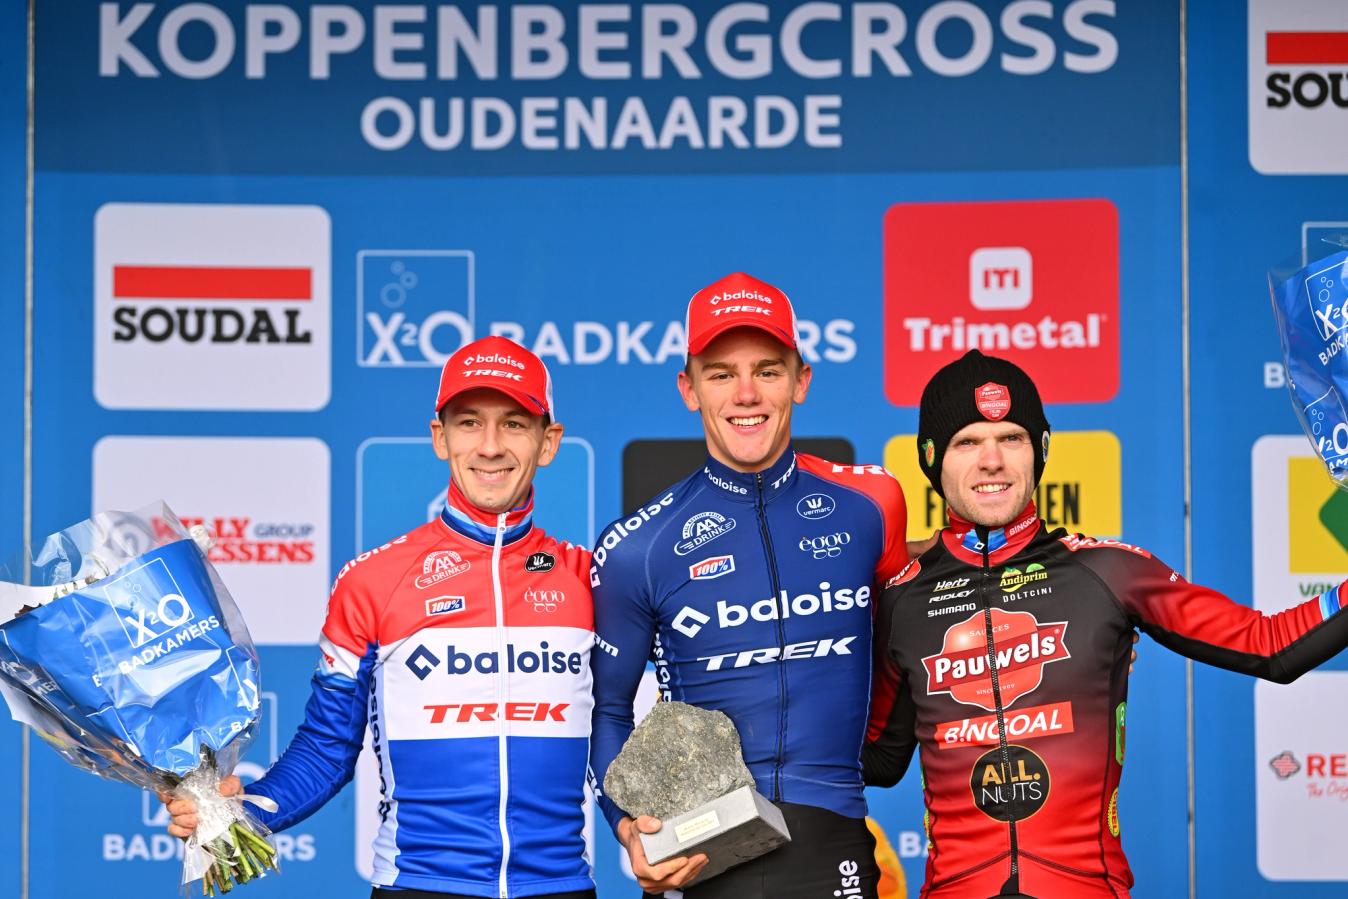 Thibau Nys beat Lars van der Haar and Eli Iserbyt at Koppenbergcross on Wednesday